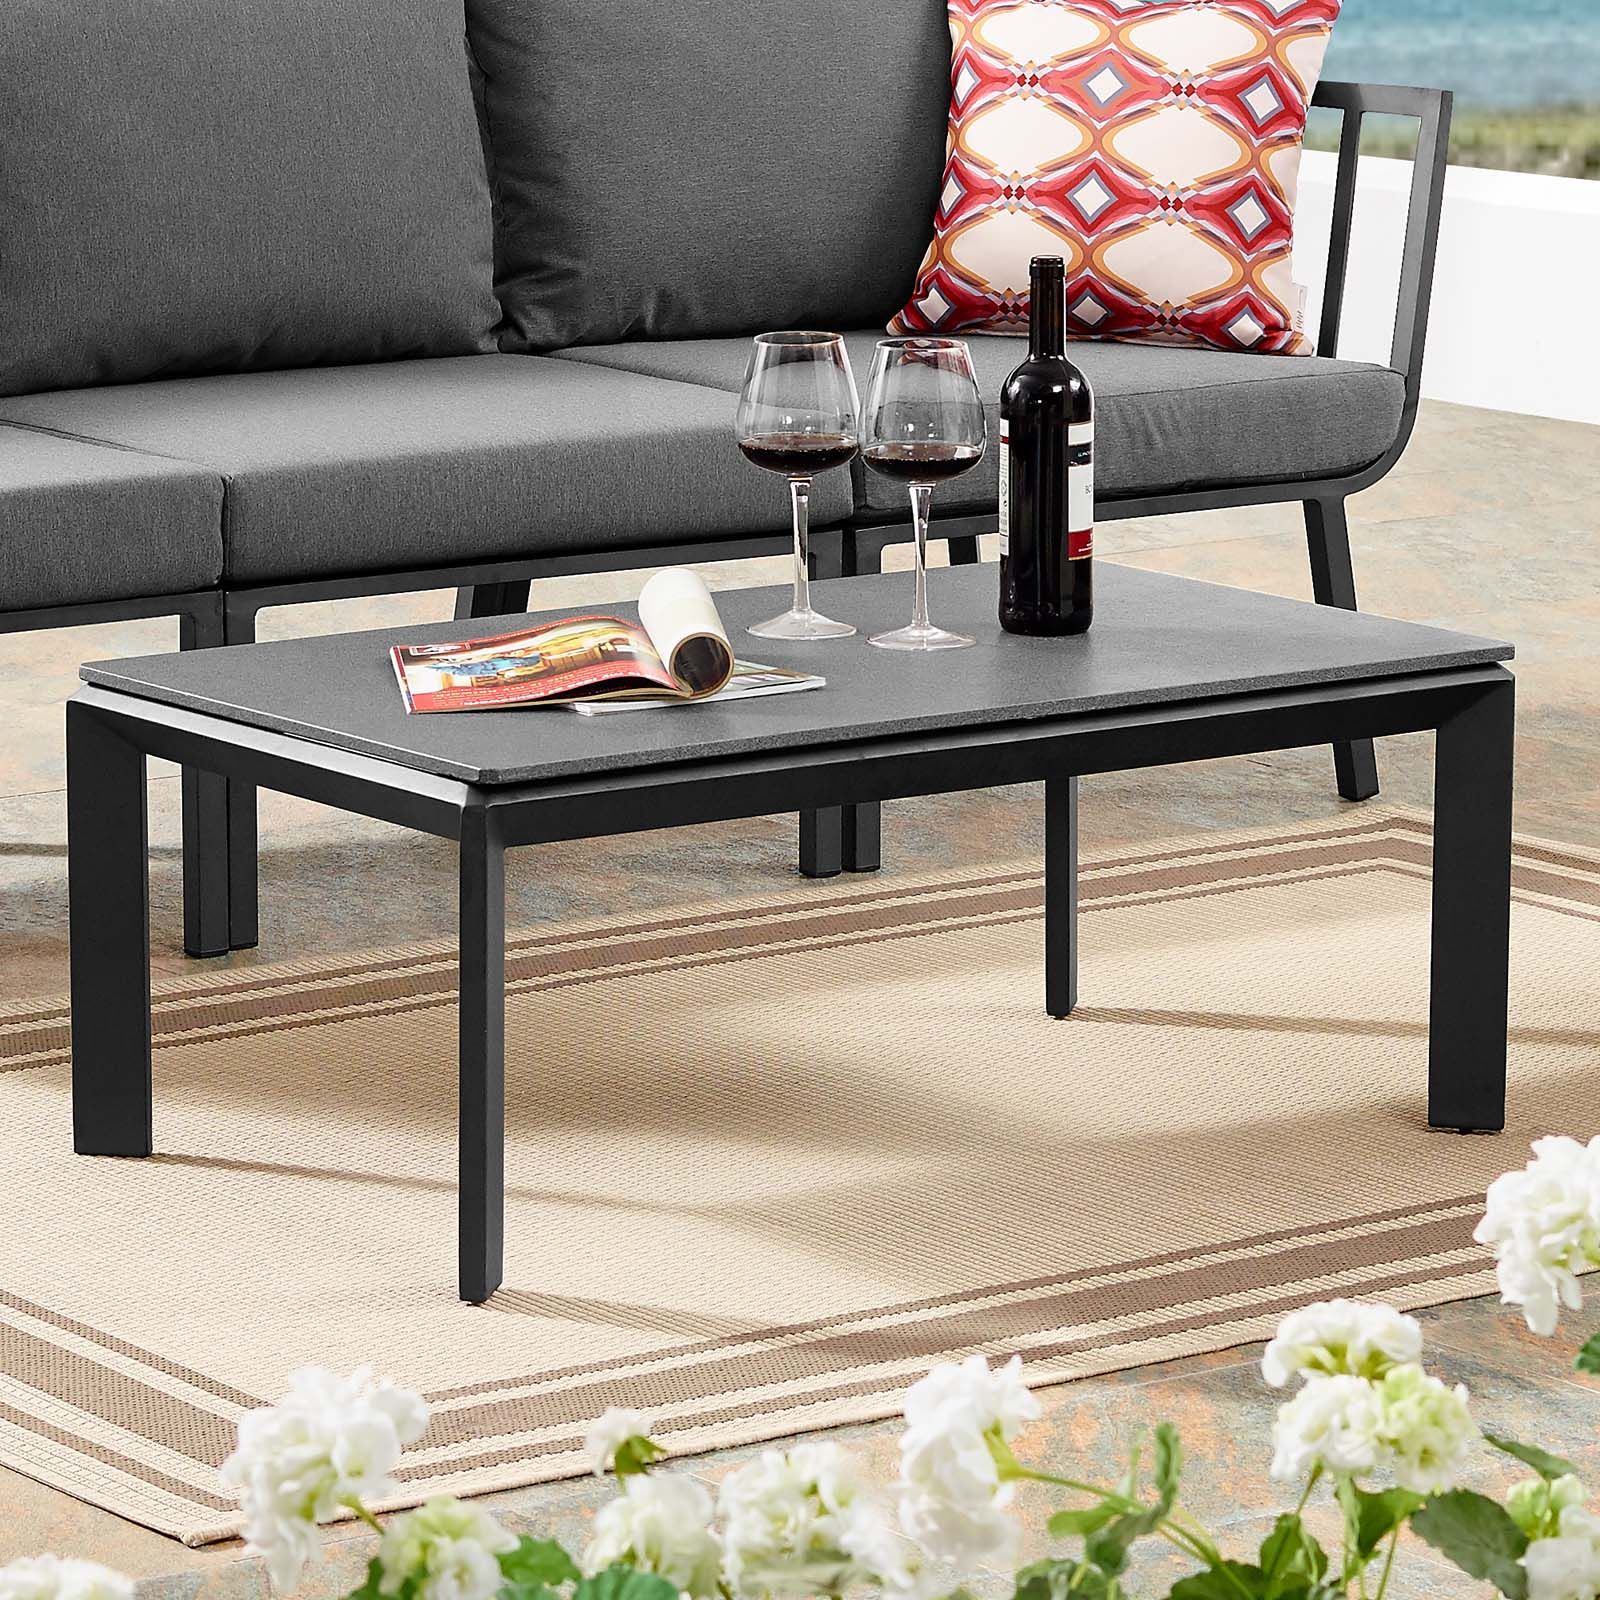 Riverside Aluminum Outdoor Patio Coffee Table Gray With Outdoor Coffee Tables With Storage (Gallery 4 of 20)